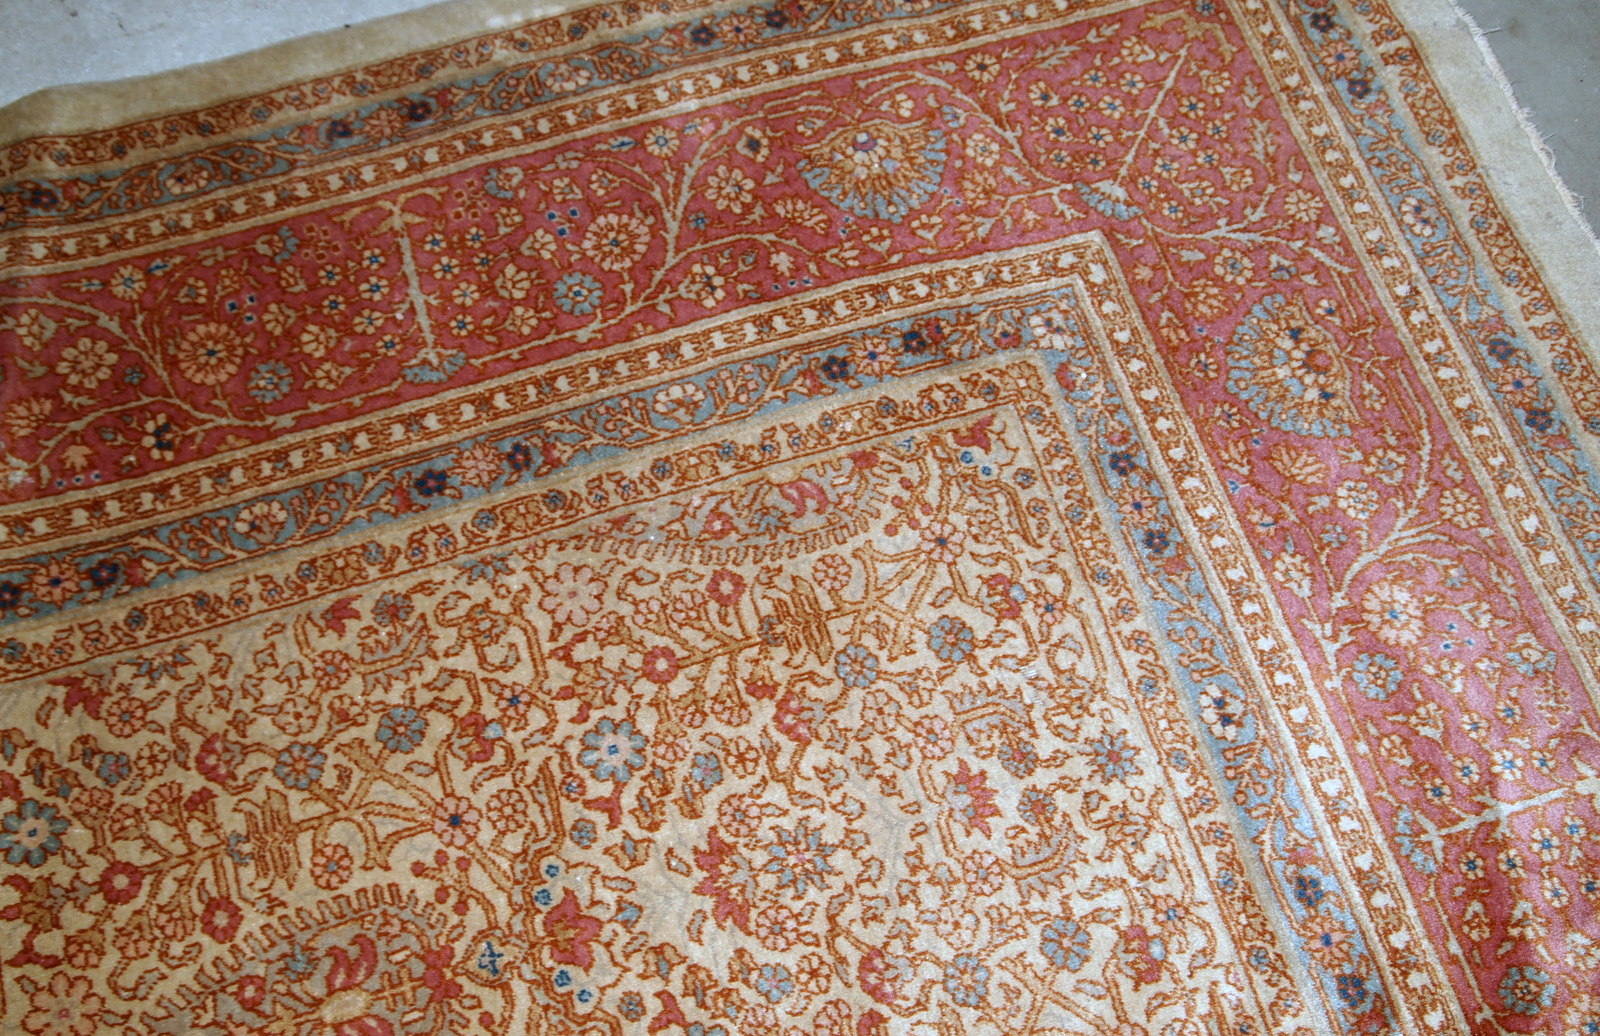 Handmade antique Turkish SIvas woolen rug in beige color. The rug is from the beginning of 20th century in original good condition.